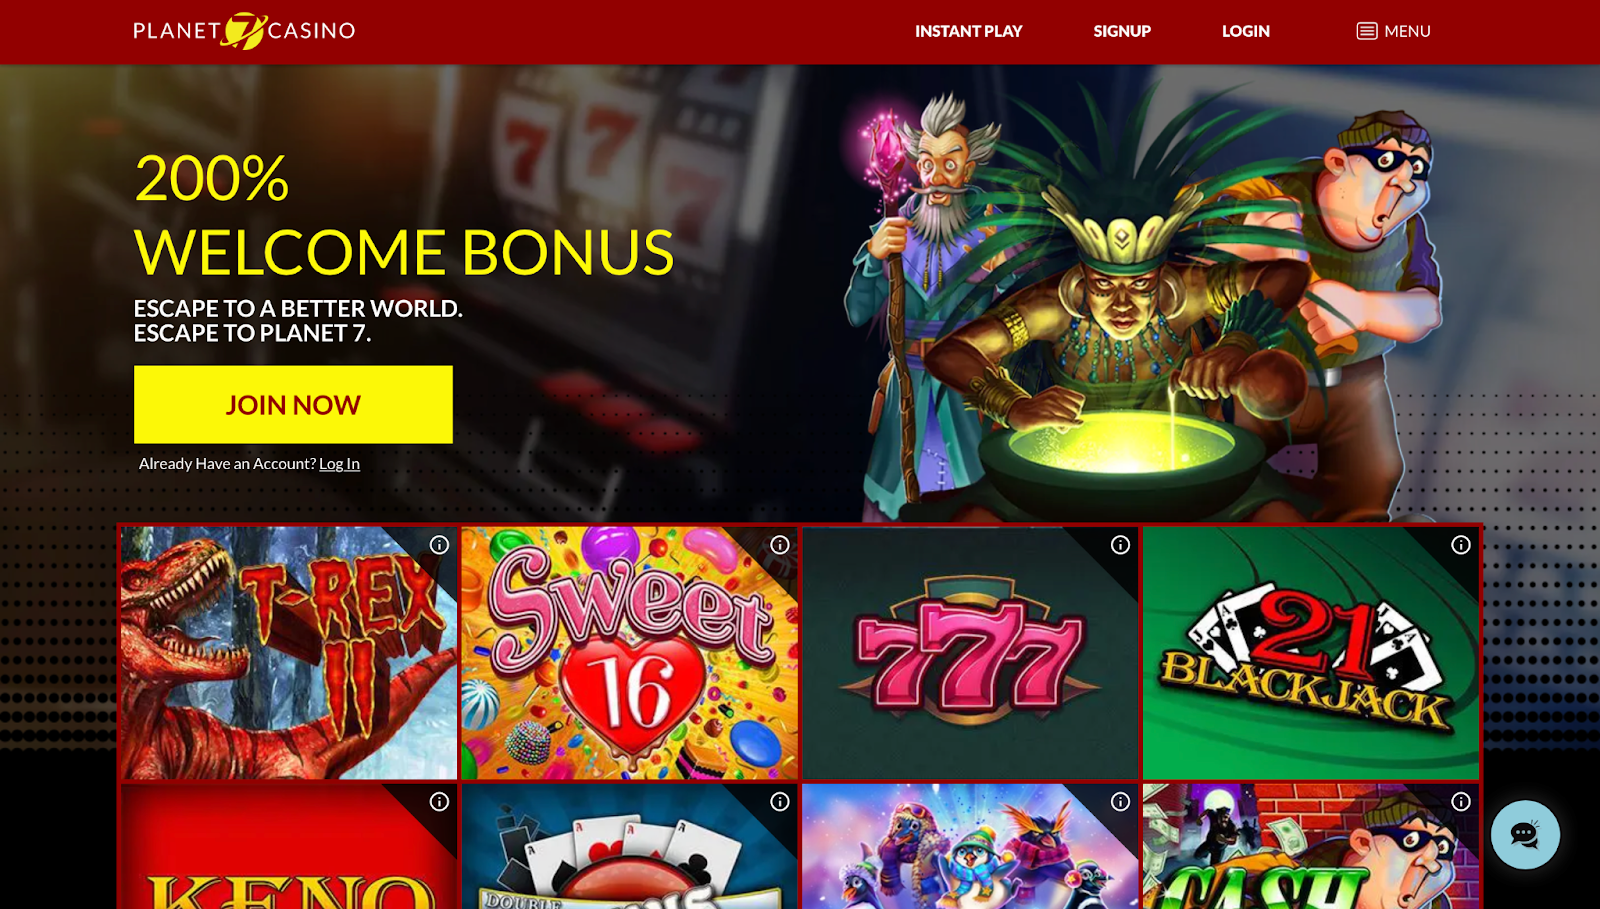 Planet 7 online casino